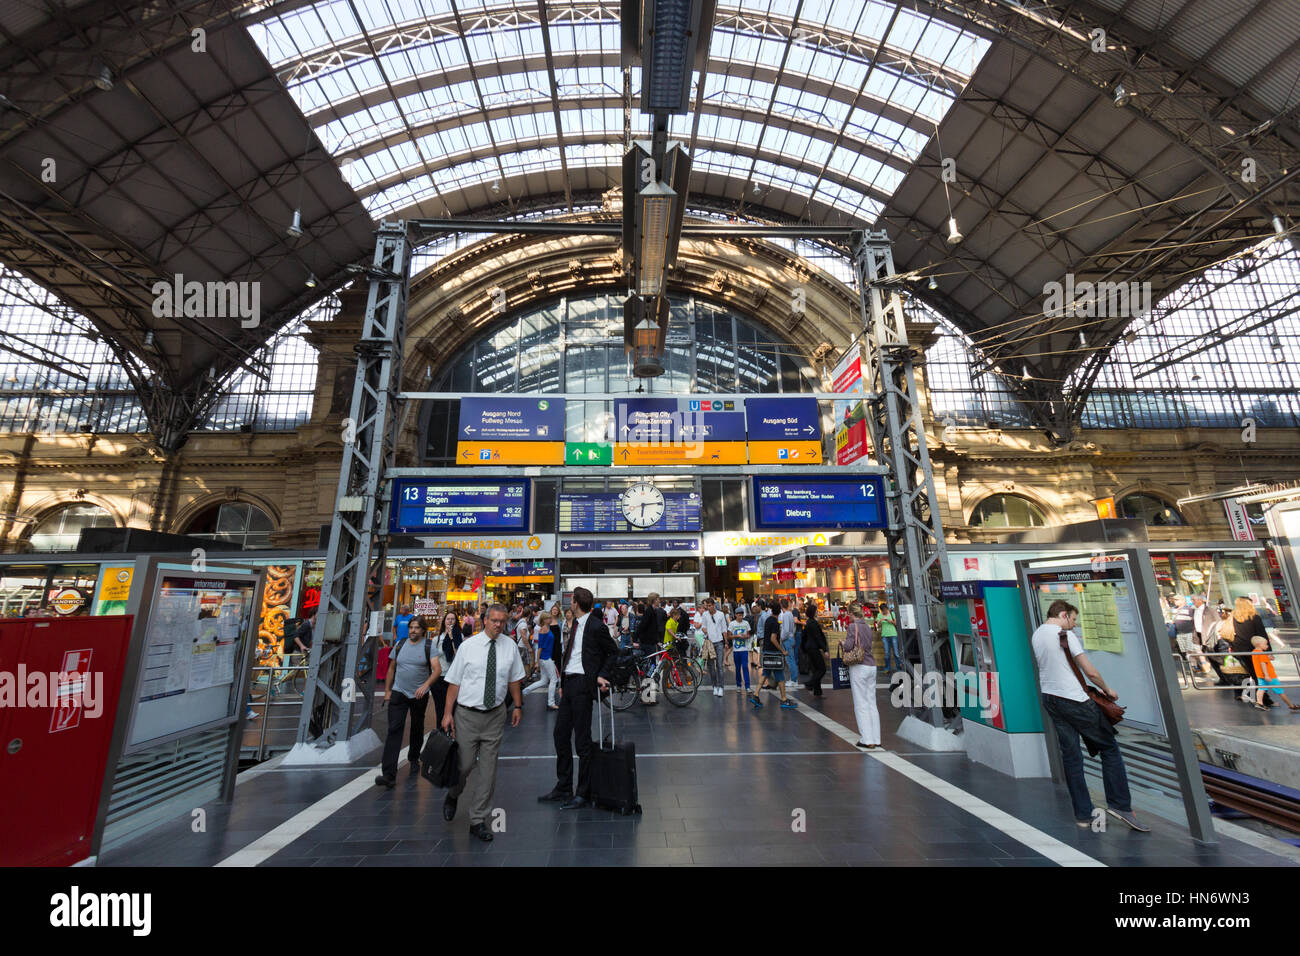 FRANKFURT, GERMANY - JUL 11: Inside the Frankfurt central train station ...